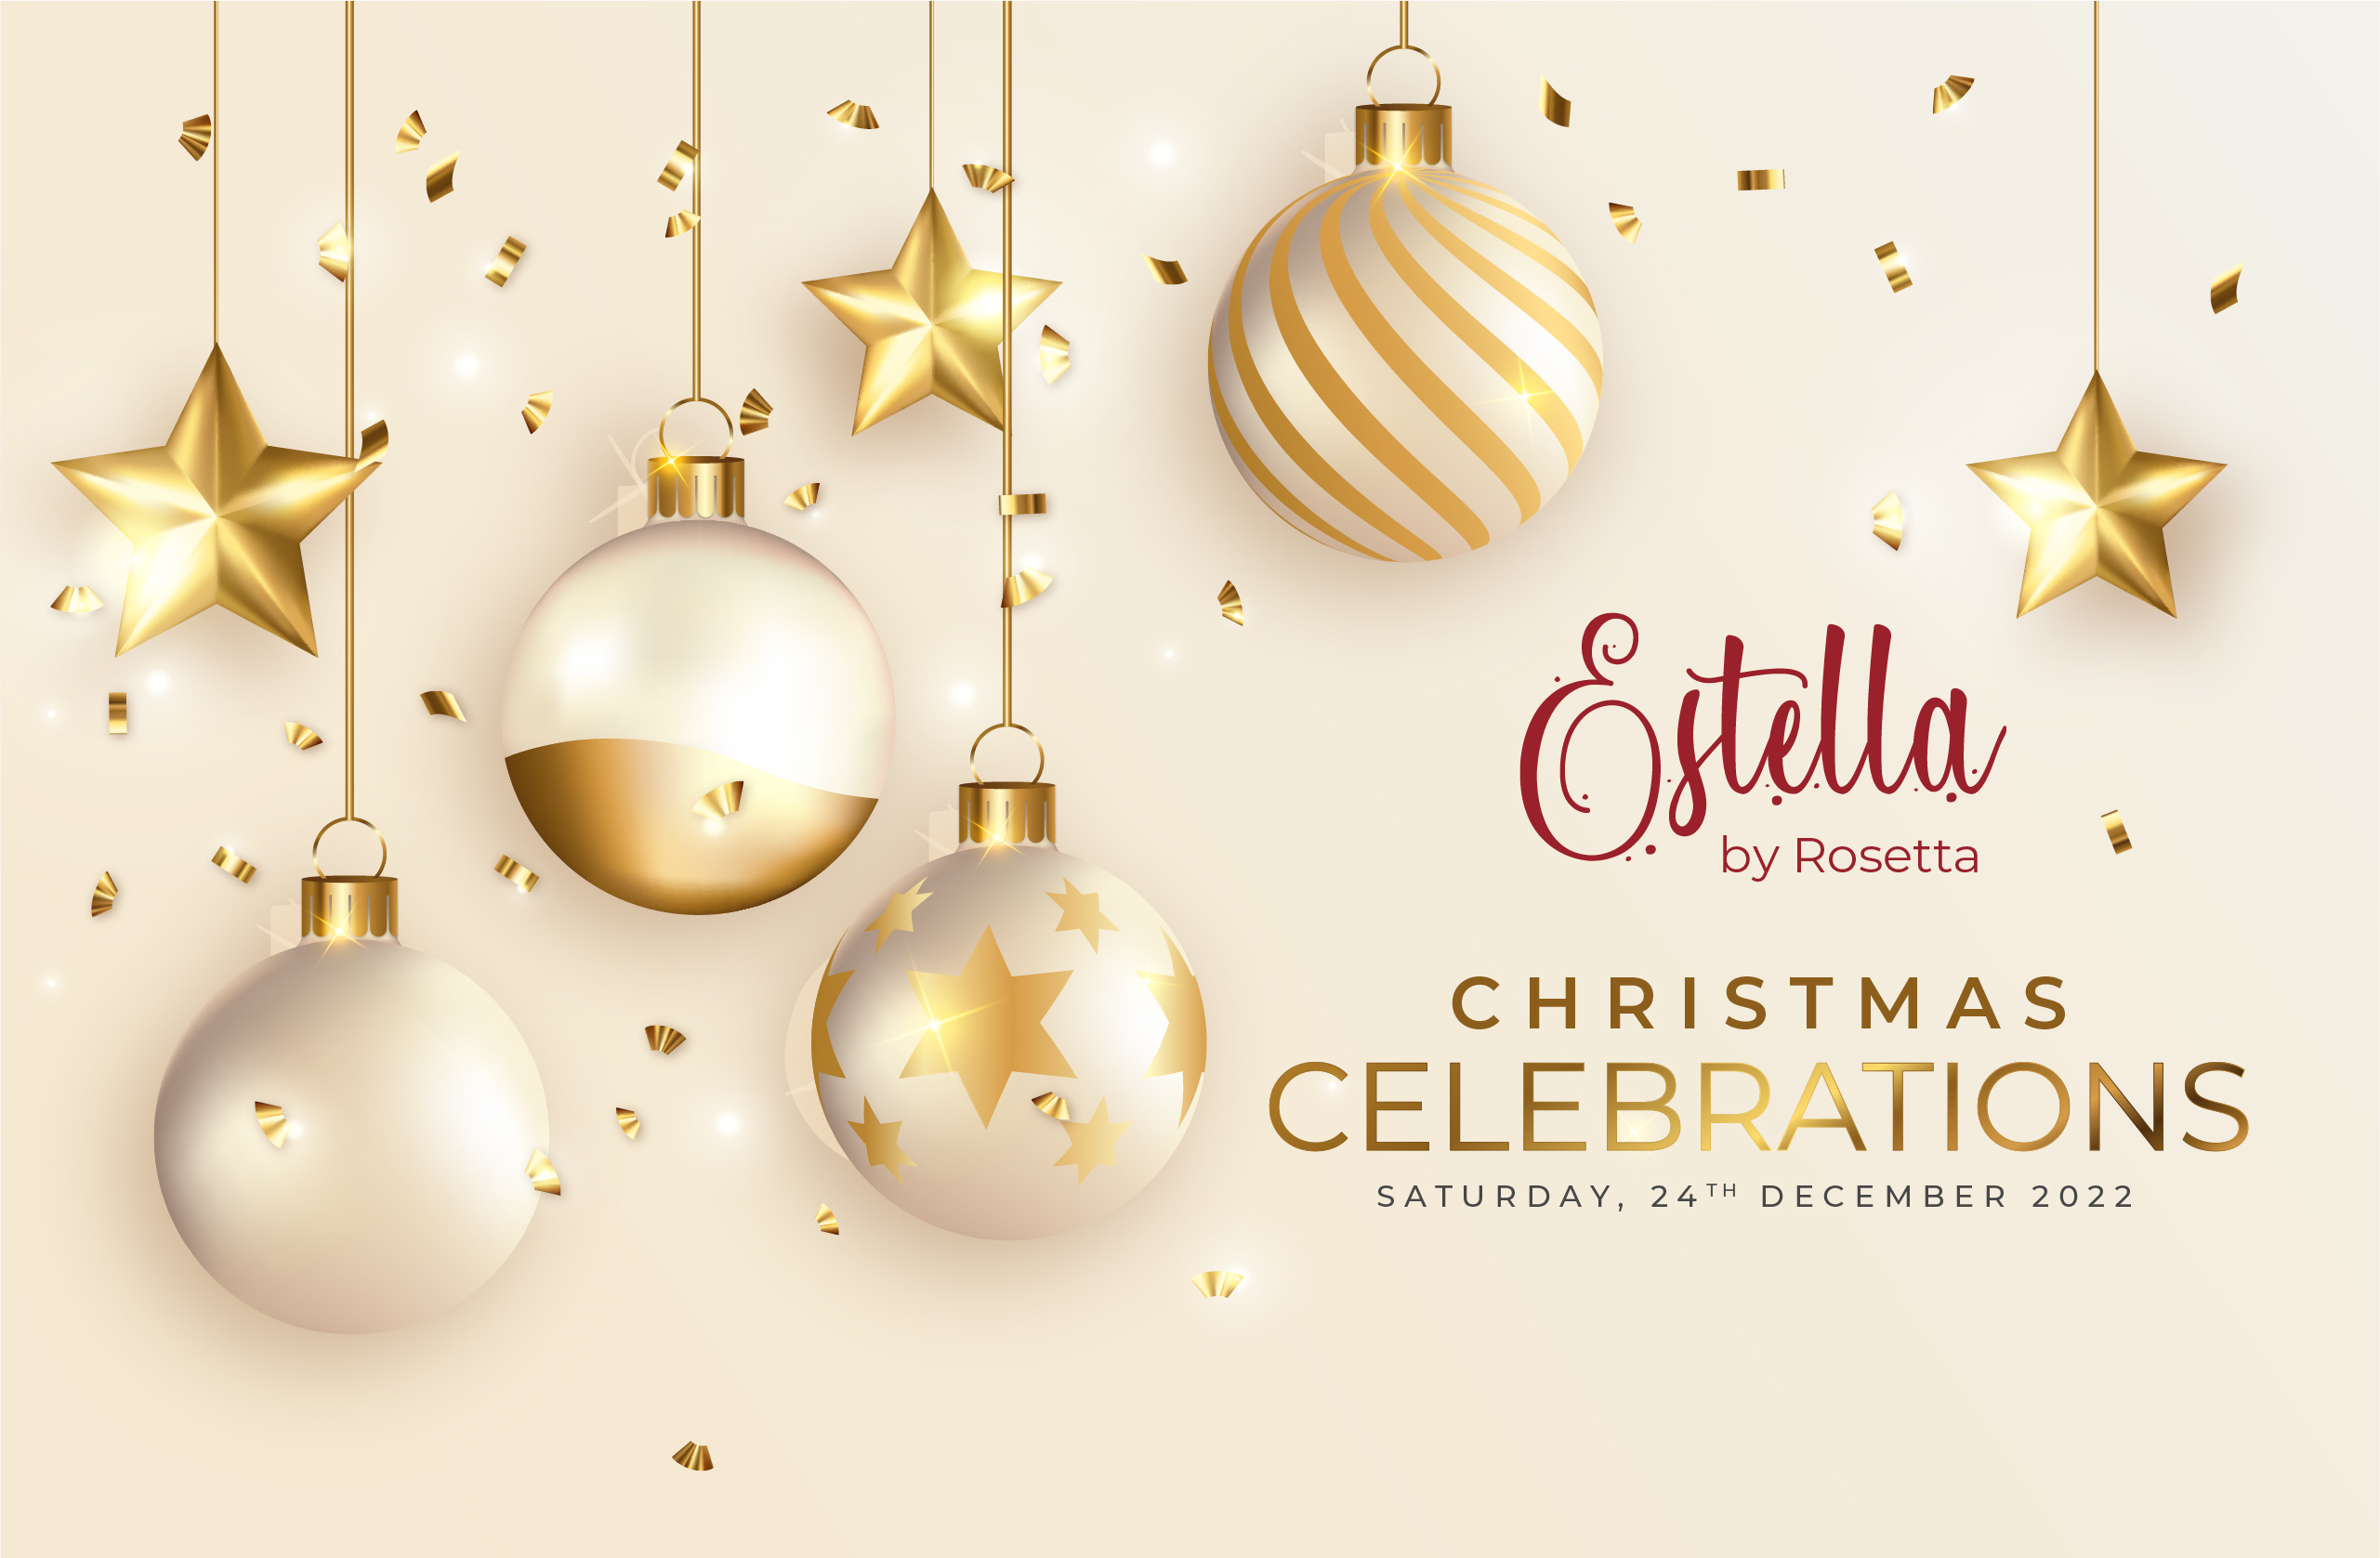 Estella by Rosetta – Christmas Celebrations